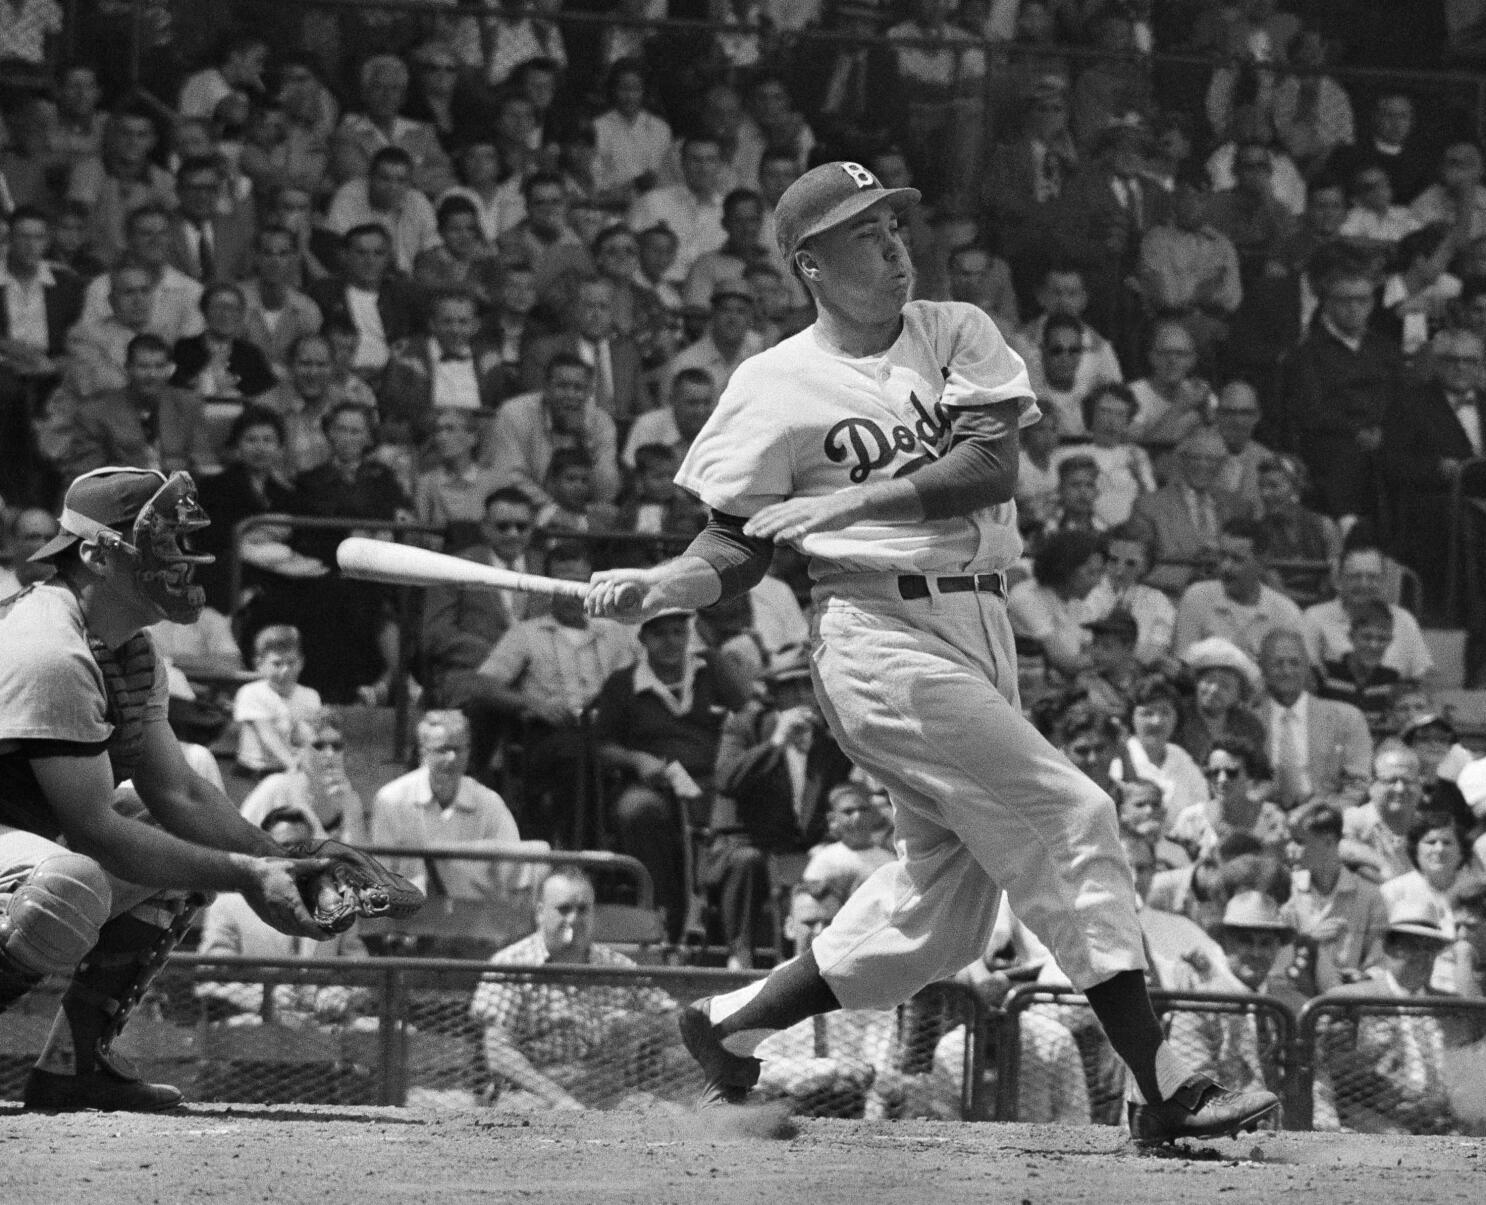 Duke Snider, Hall of Fame, LA Dodgers, Signed 8x10 Photograph